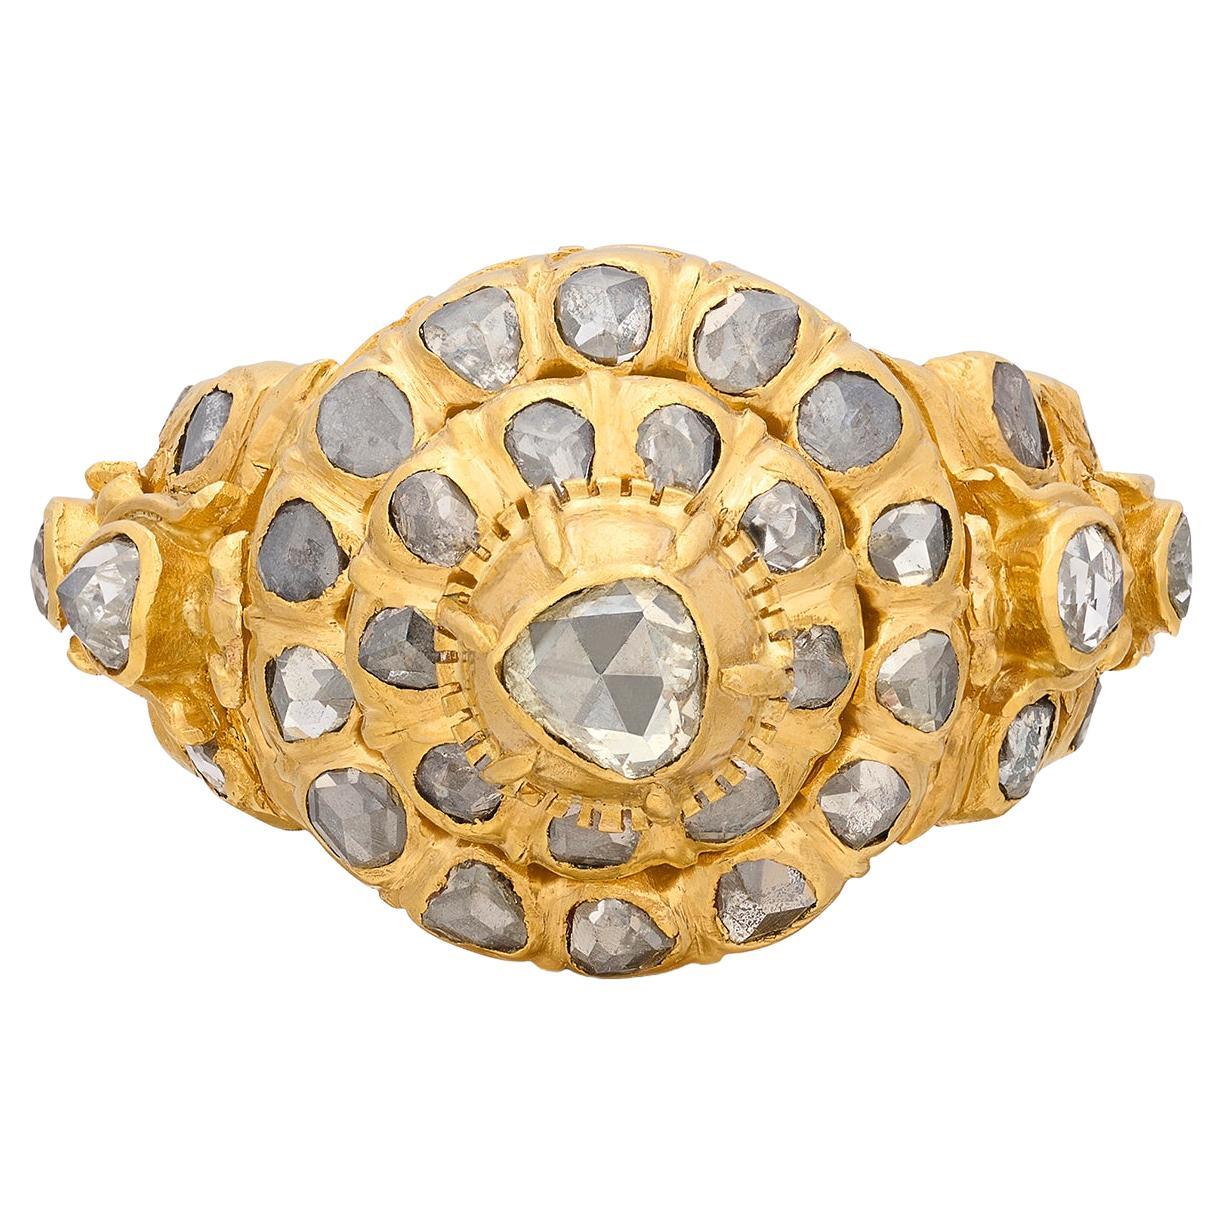 Antique 22k Gold & Diamond Poison Ring